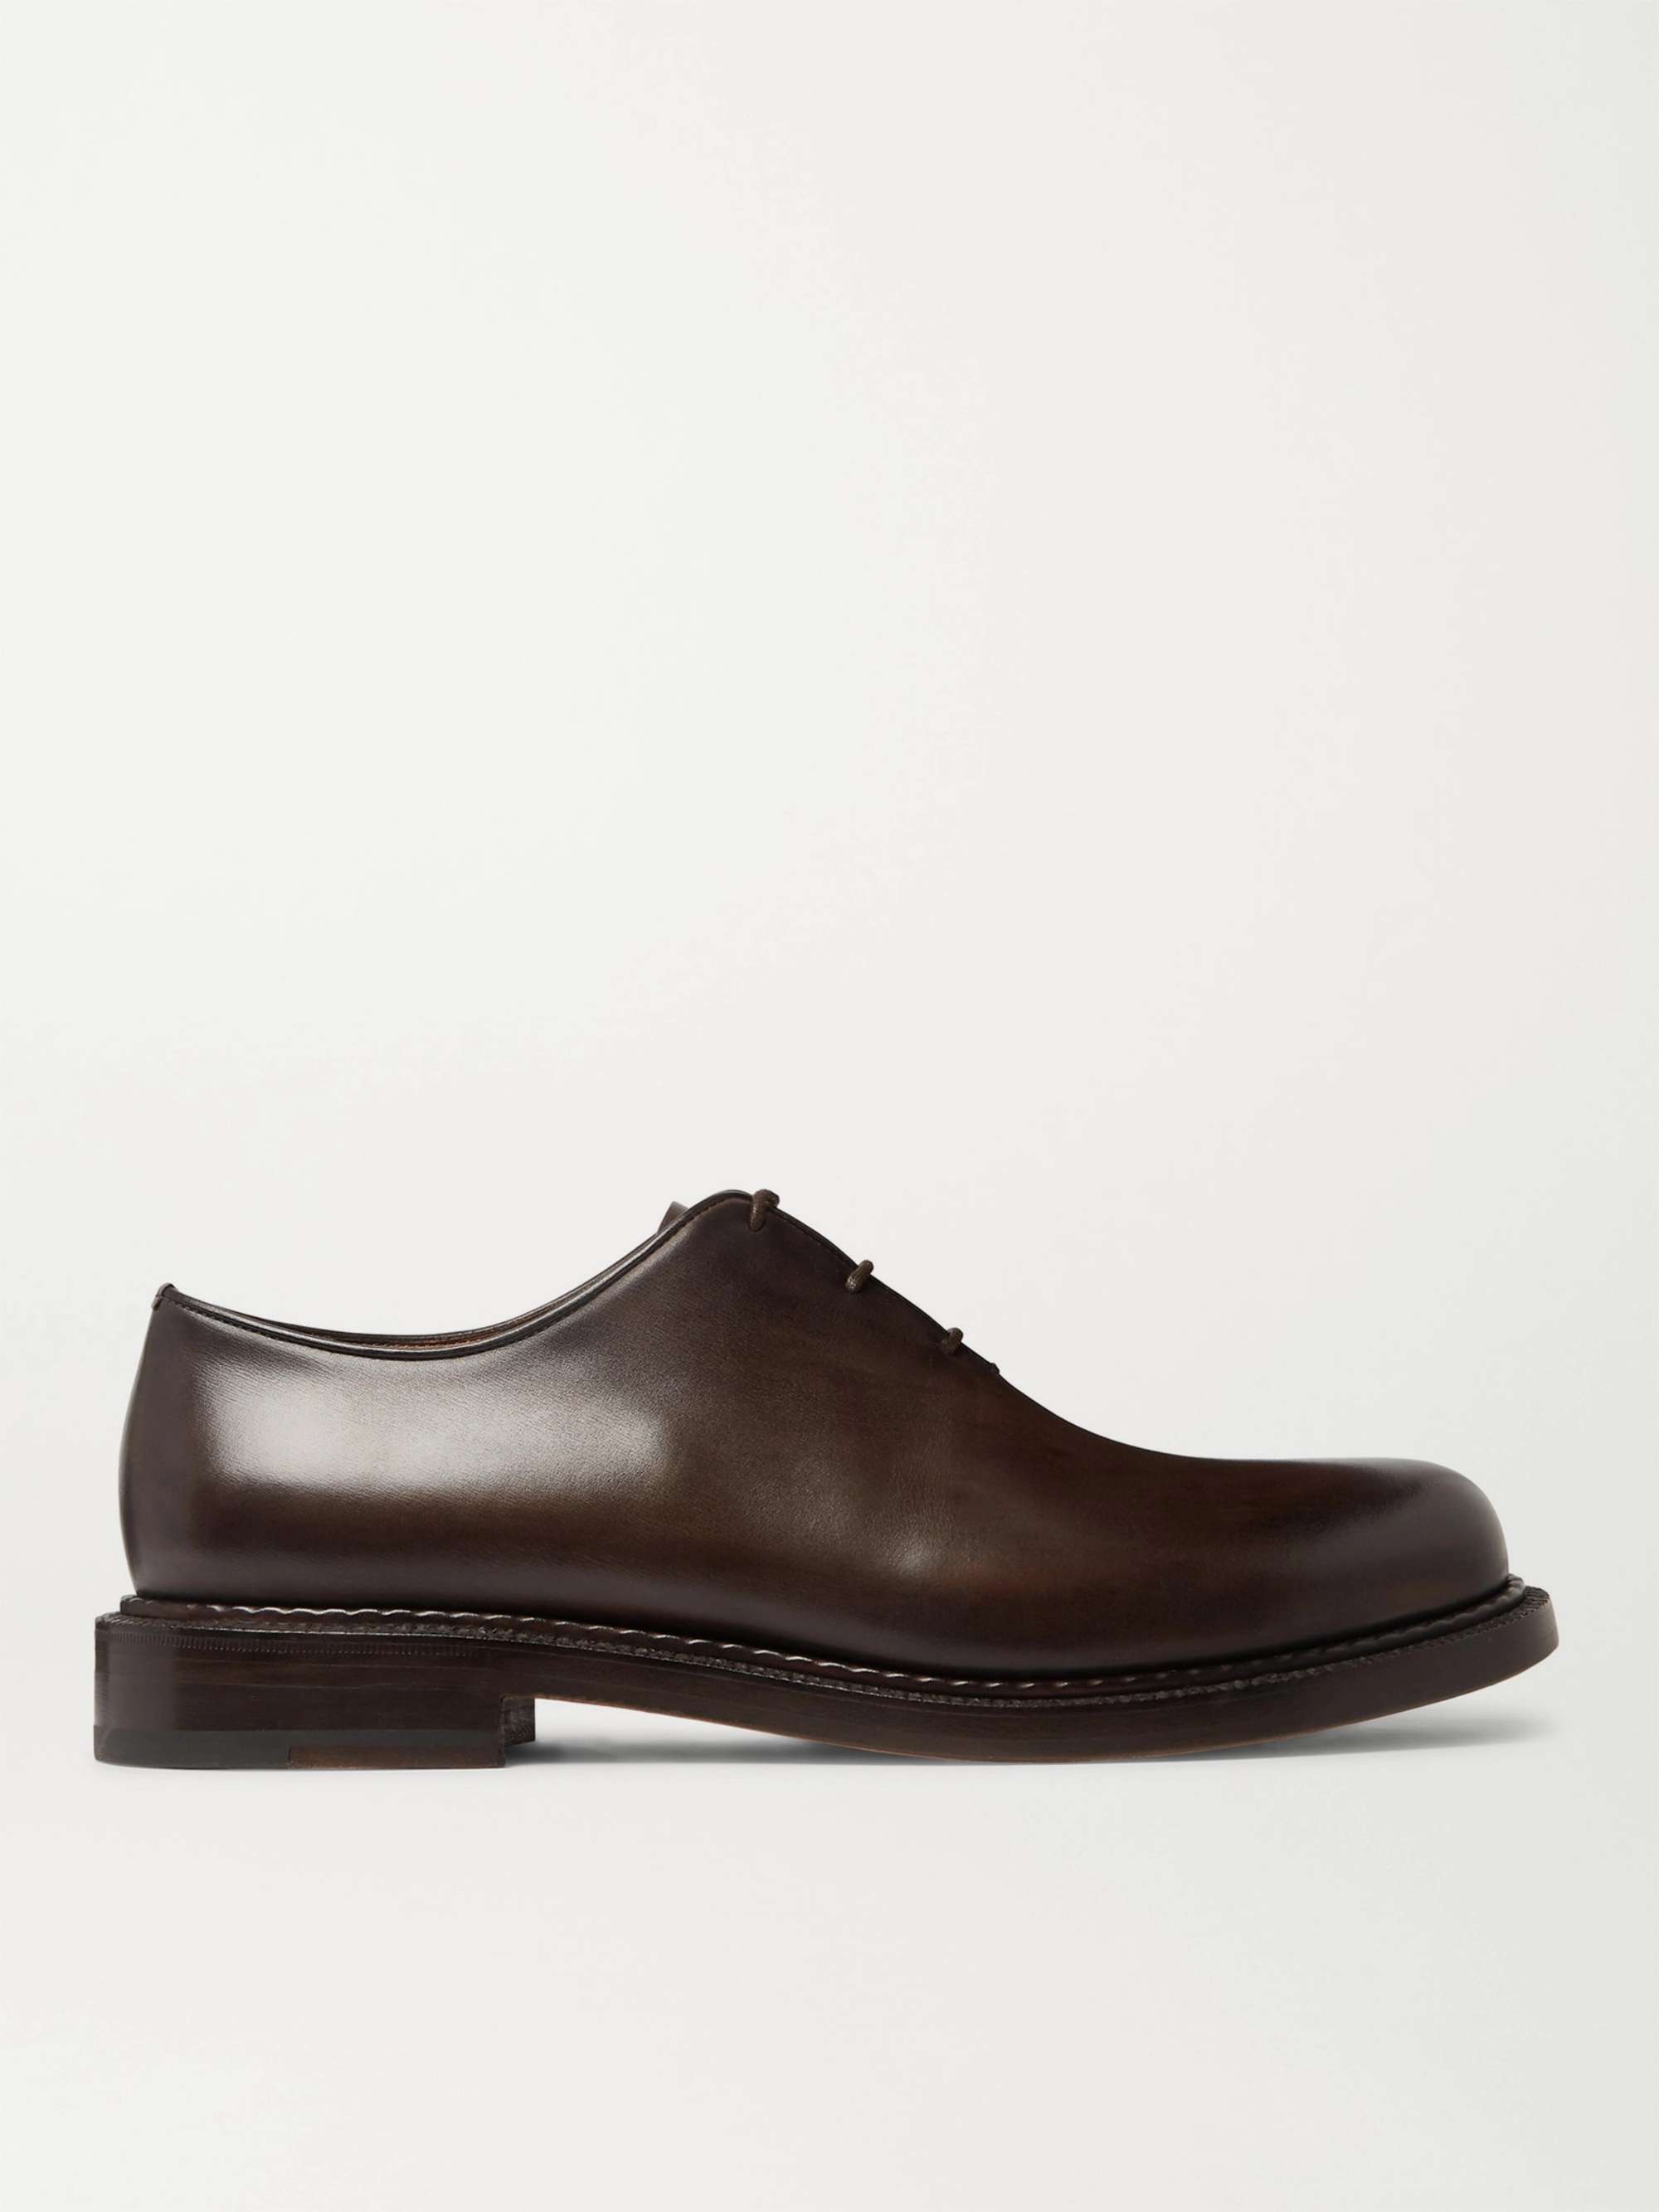 BERLUTI 1895 Venezia Leather Oxford Shoes